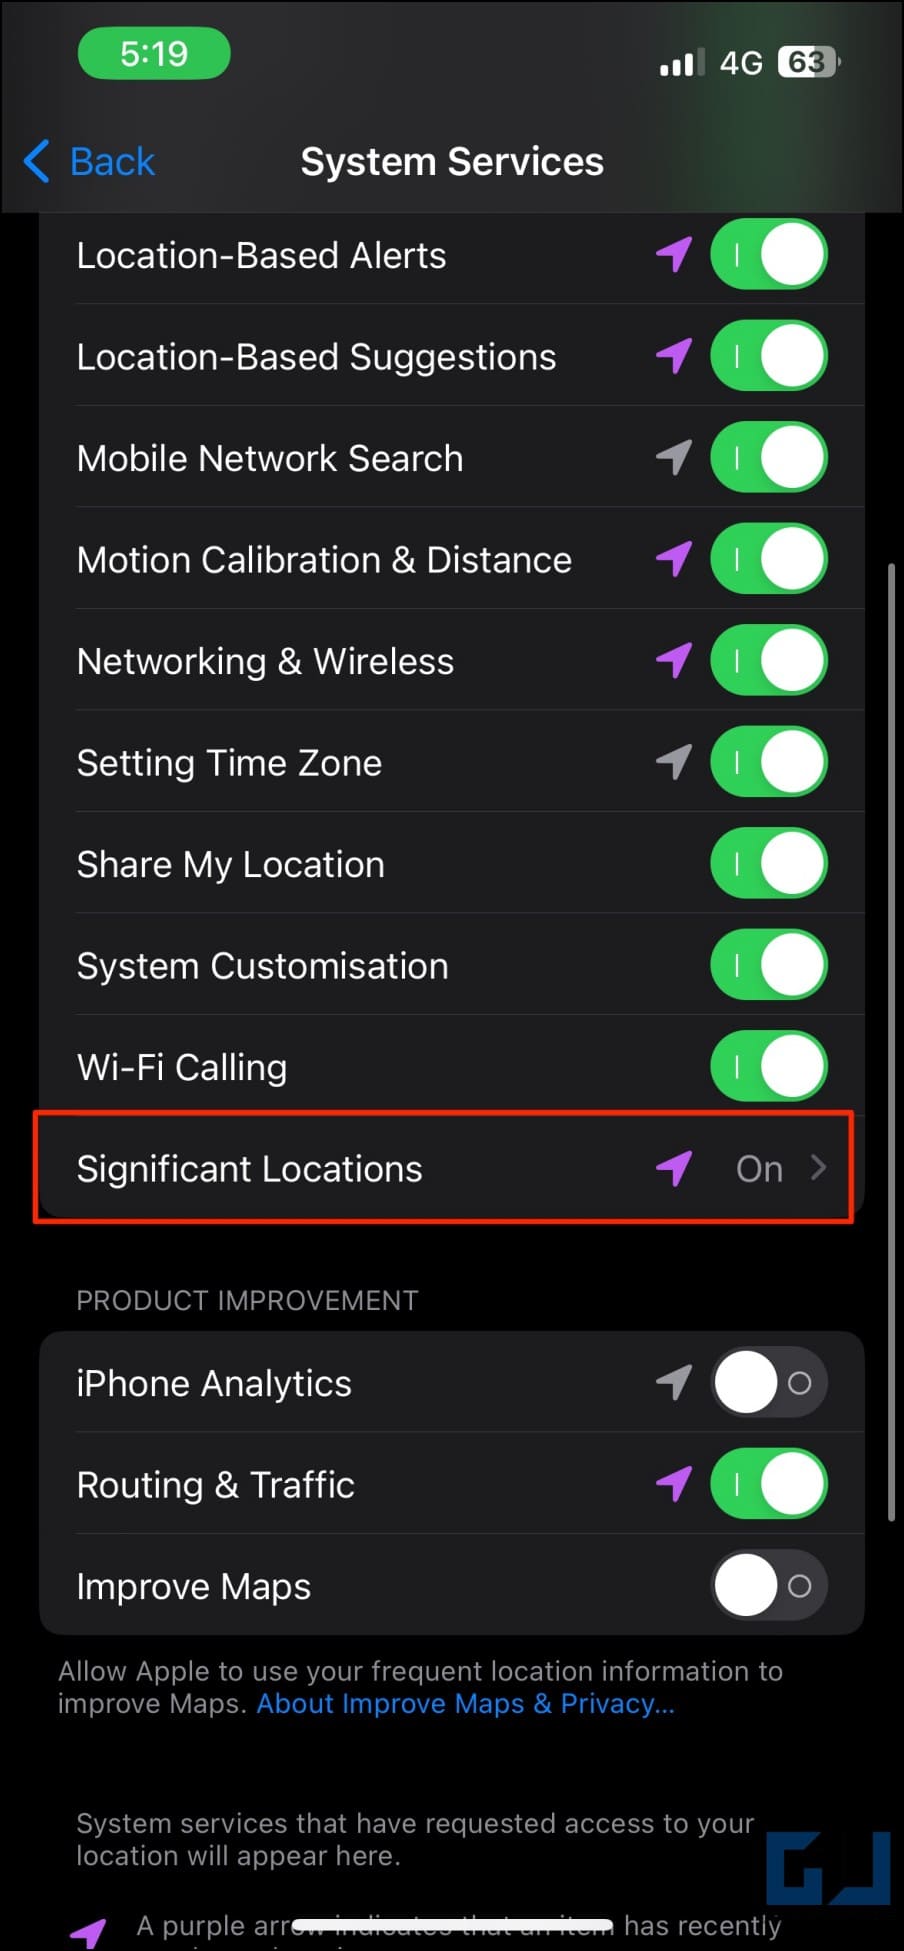 Desactivar ubicaciones significativas de iPhone